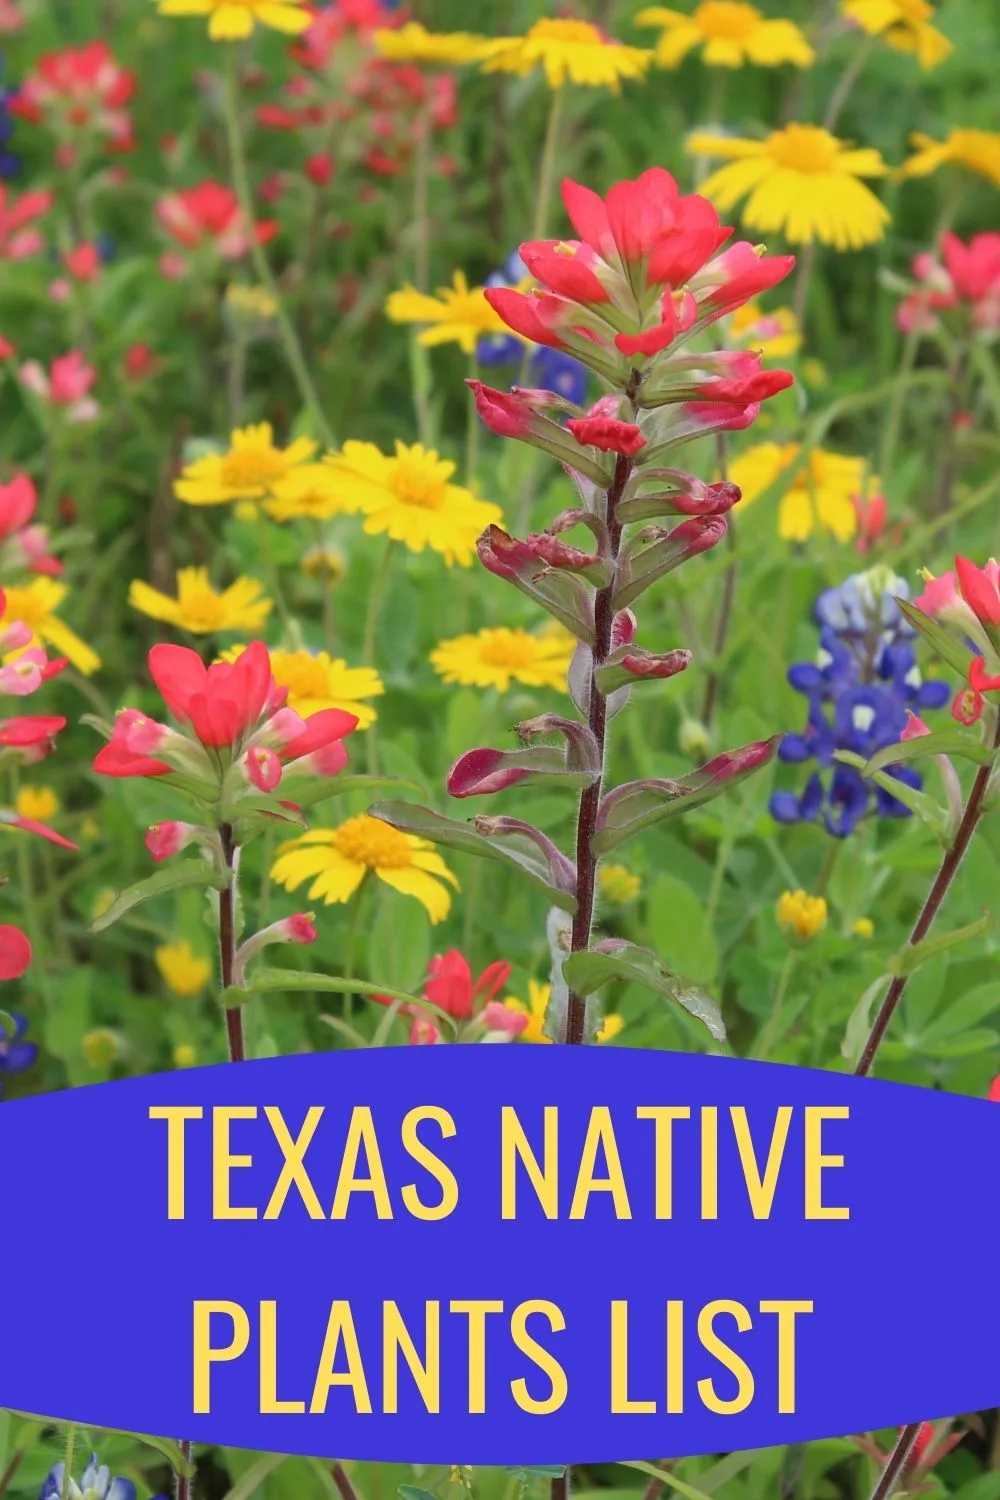 Texas native plants list